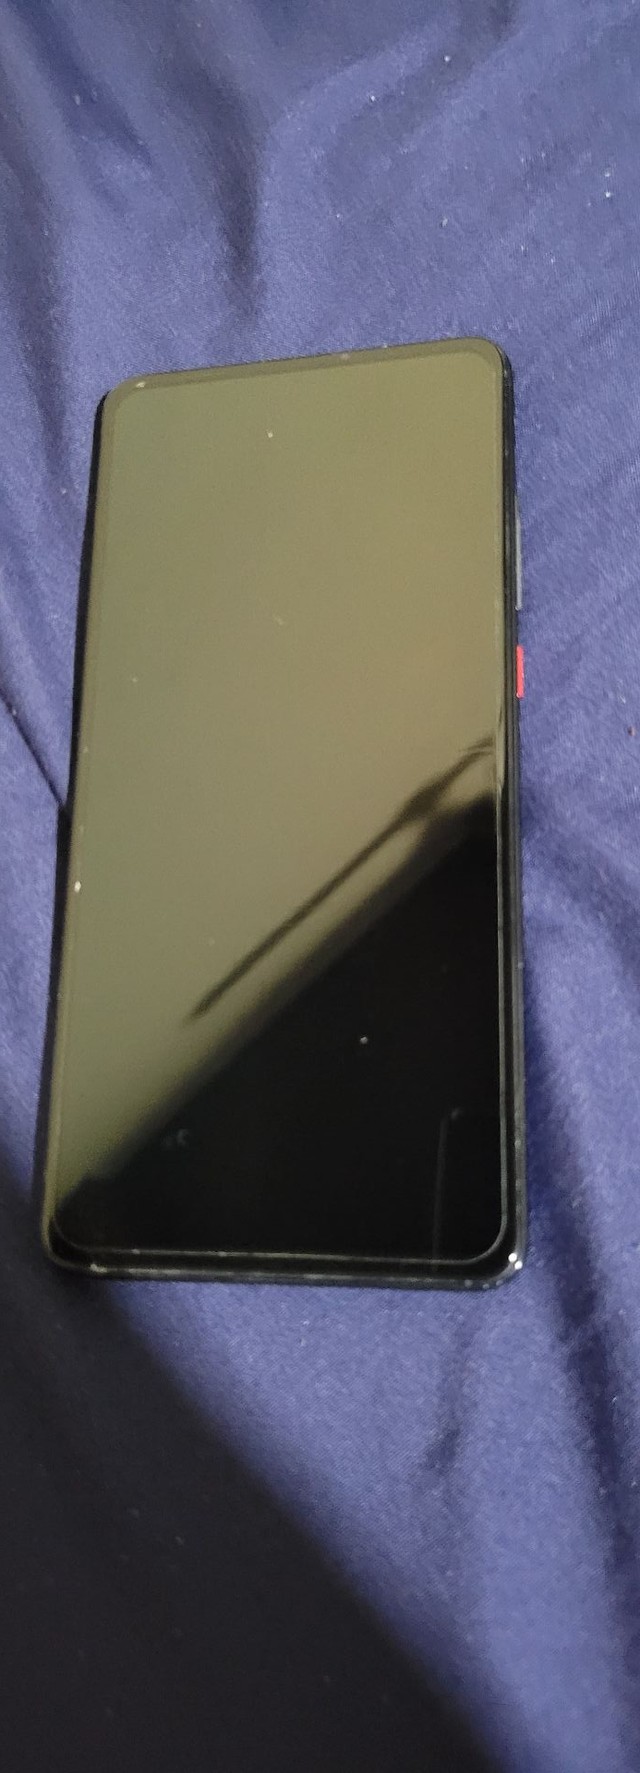 Celular Xiaomi MI 9T (vendo ou troco) - Foto 5